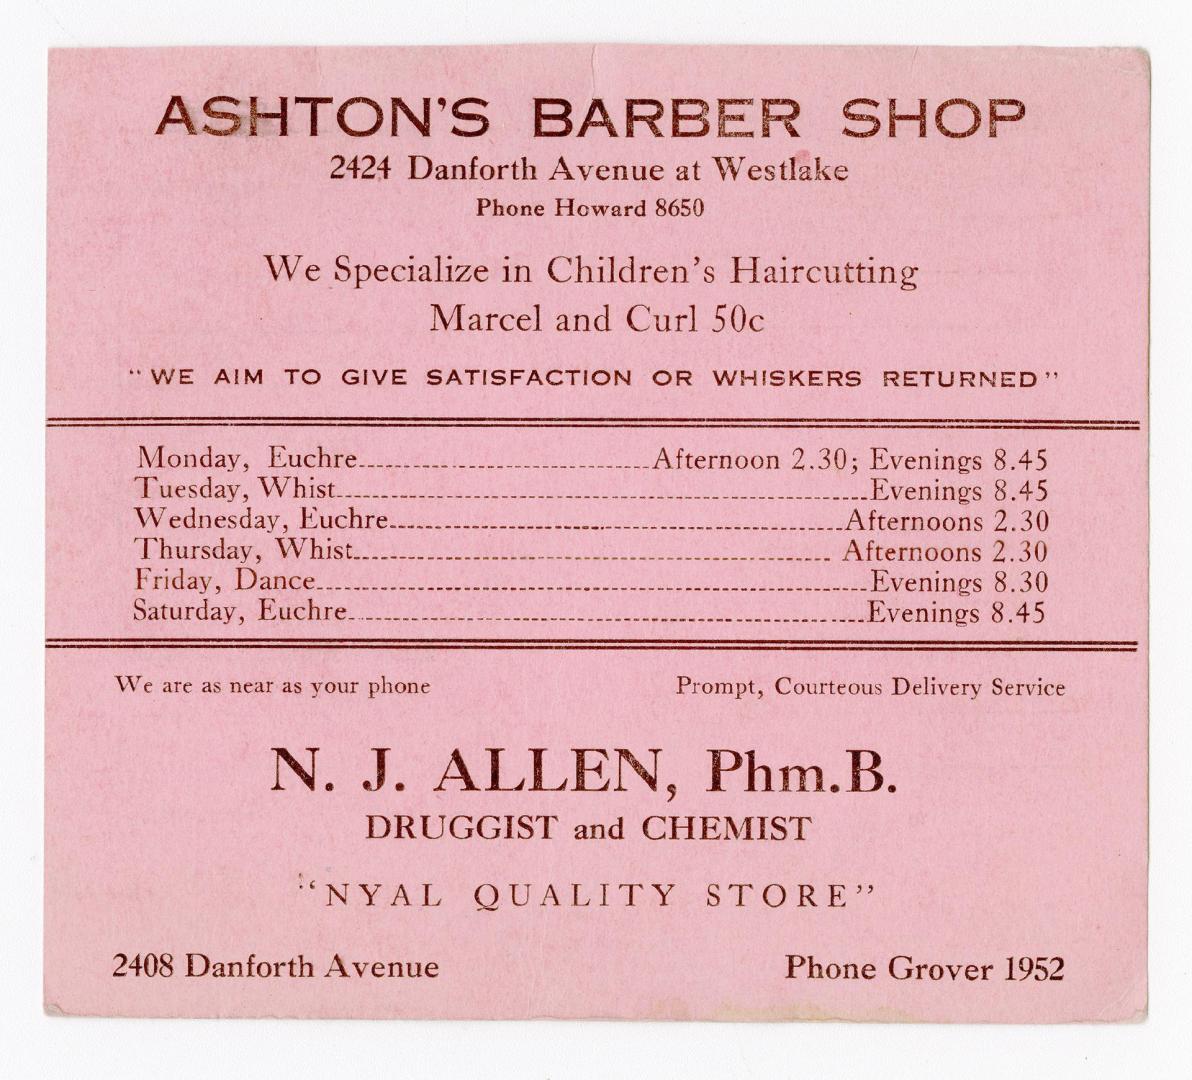 Barber Shop (digital paper)